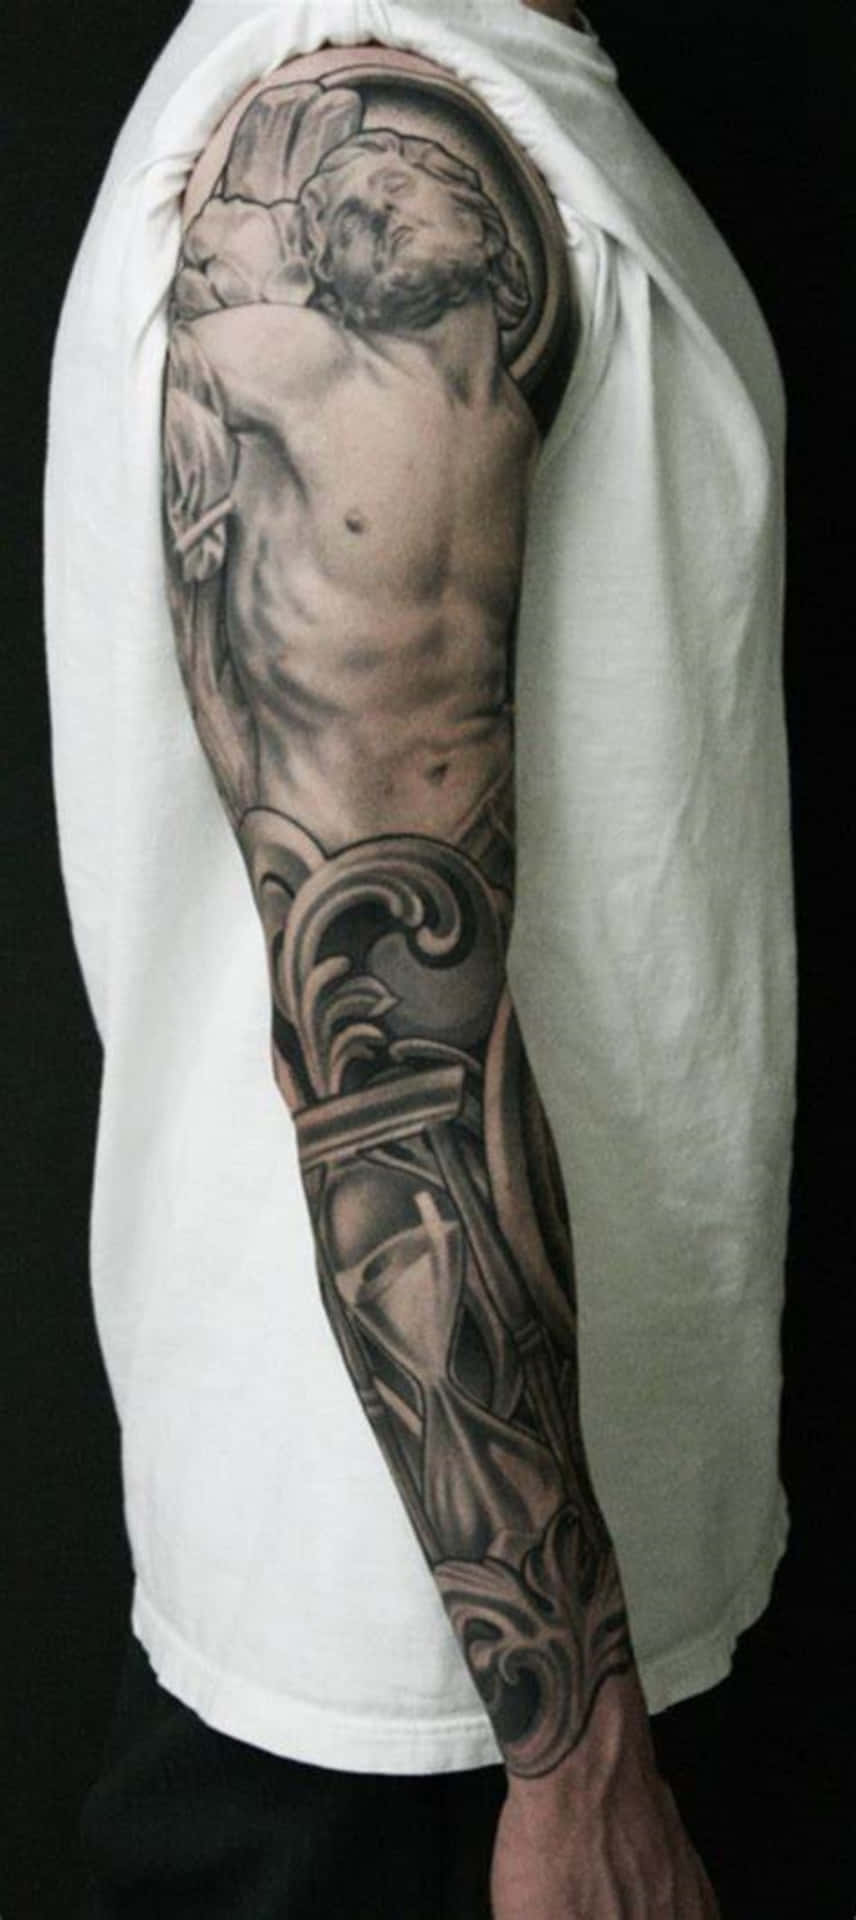 Intricate Arm Tattoo Art